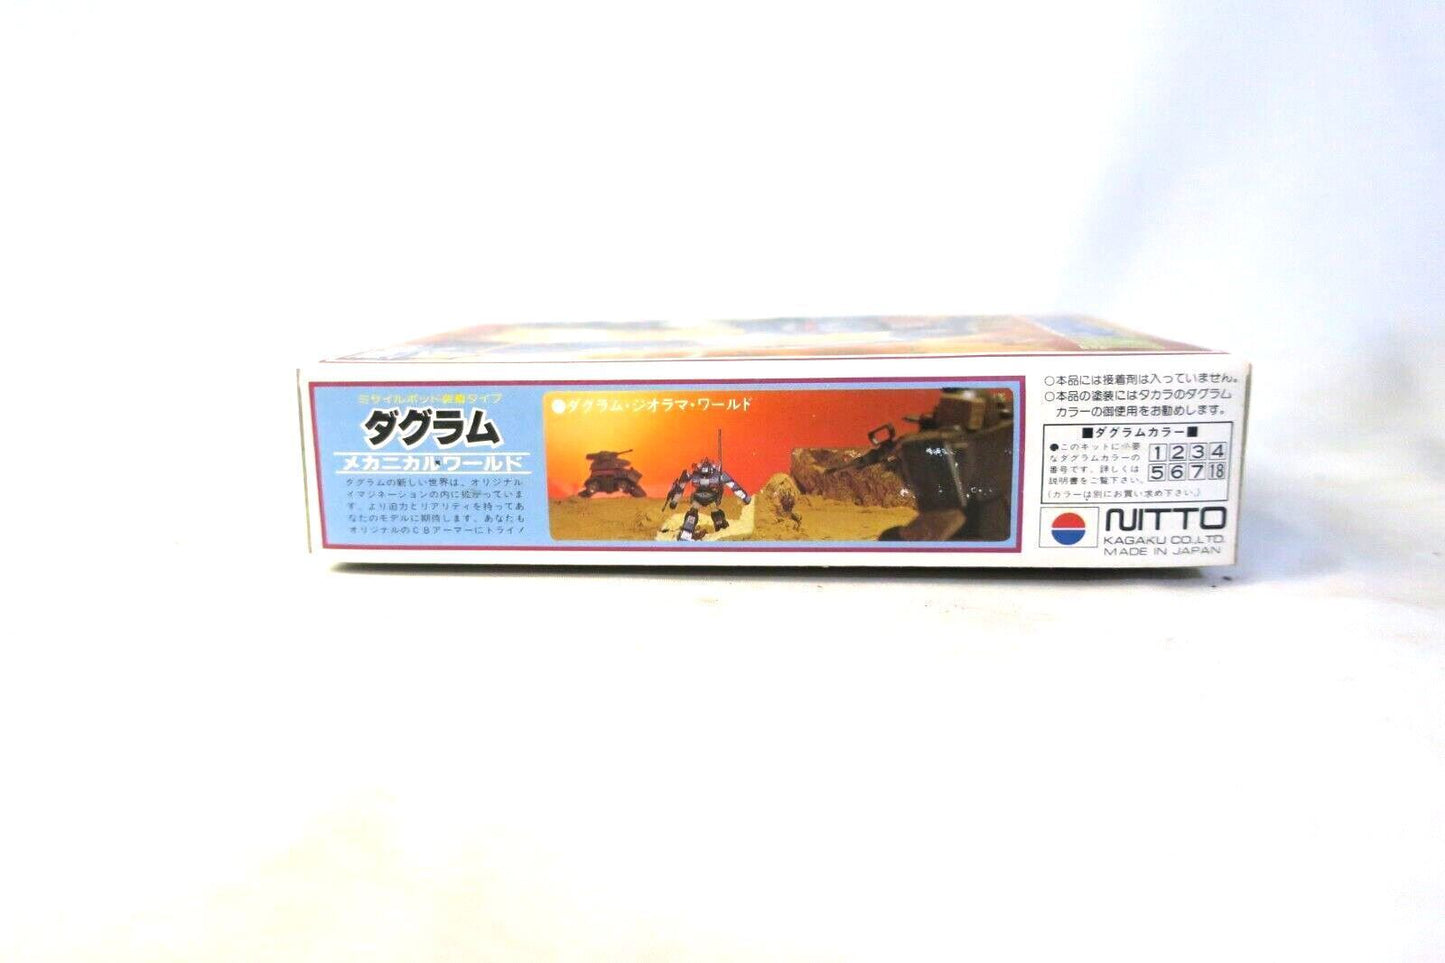 Nitto - Combat Armor Dougram JAKT Type - 1/144 Scale Model Kit (H)